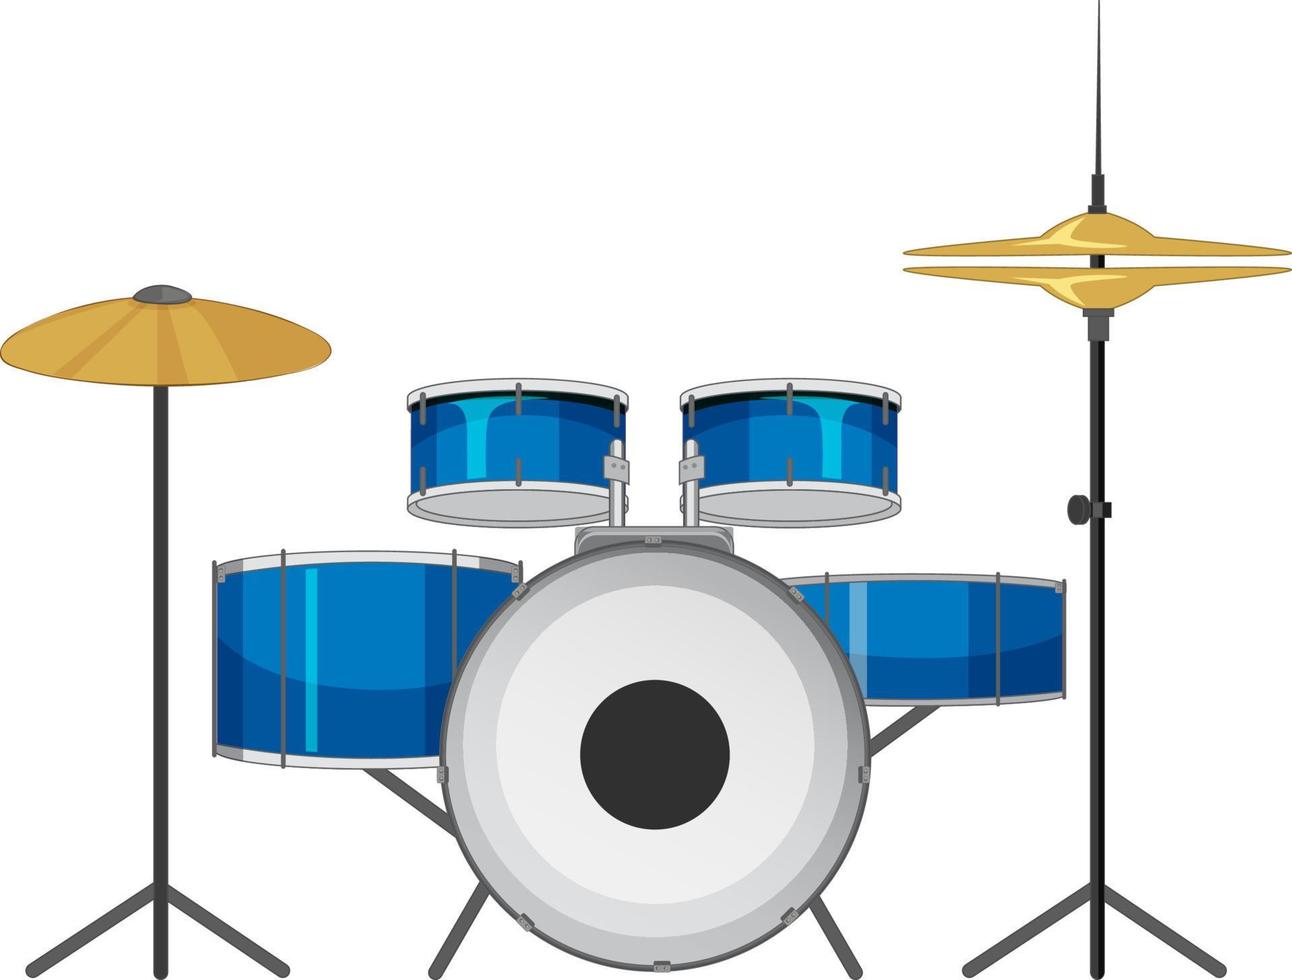 Drum set musical instrument vector